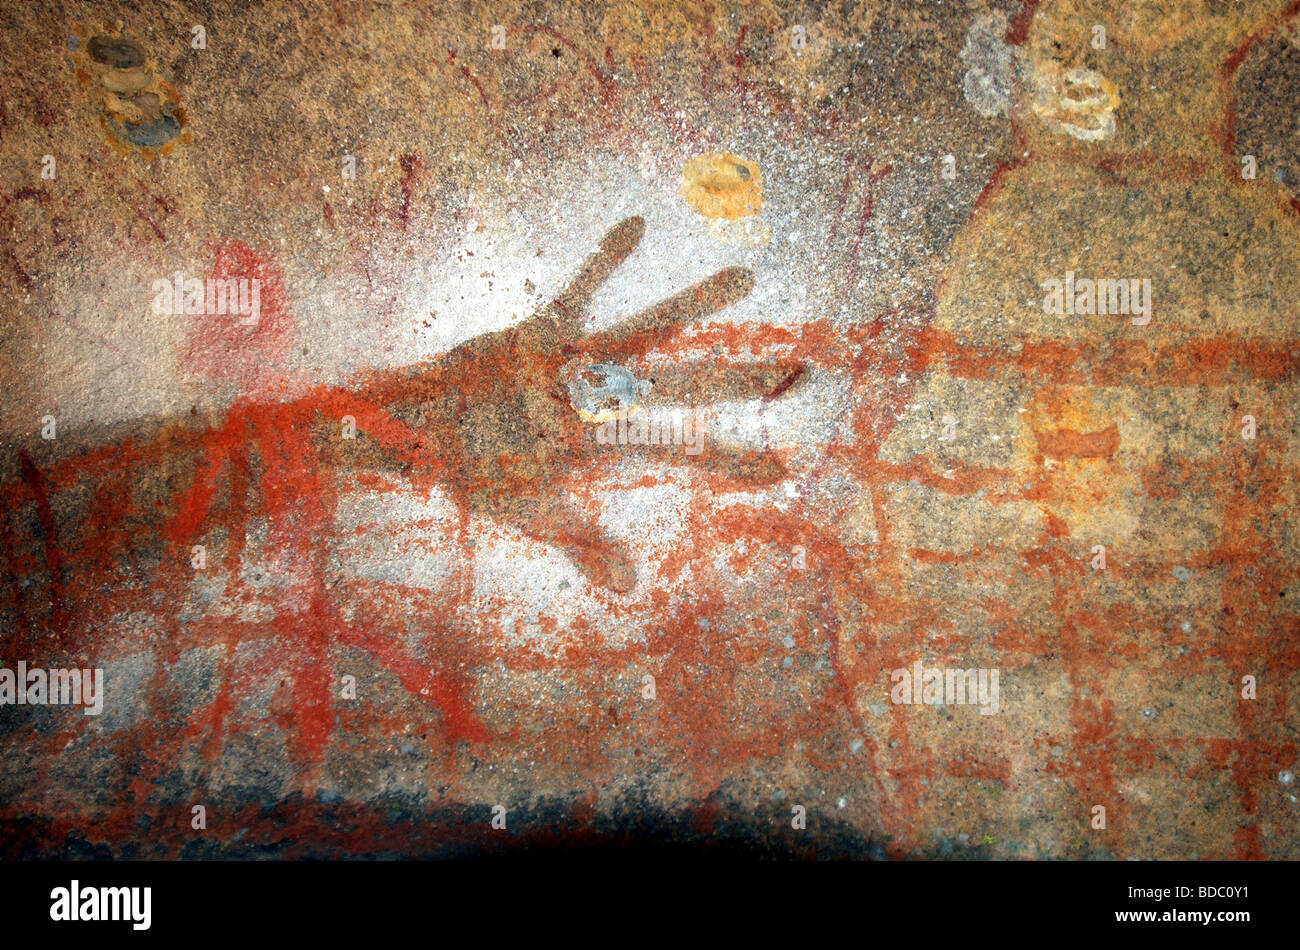 Aboriginal rock art australia hands hi-res stock photography and images -  Alamy